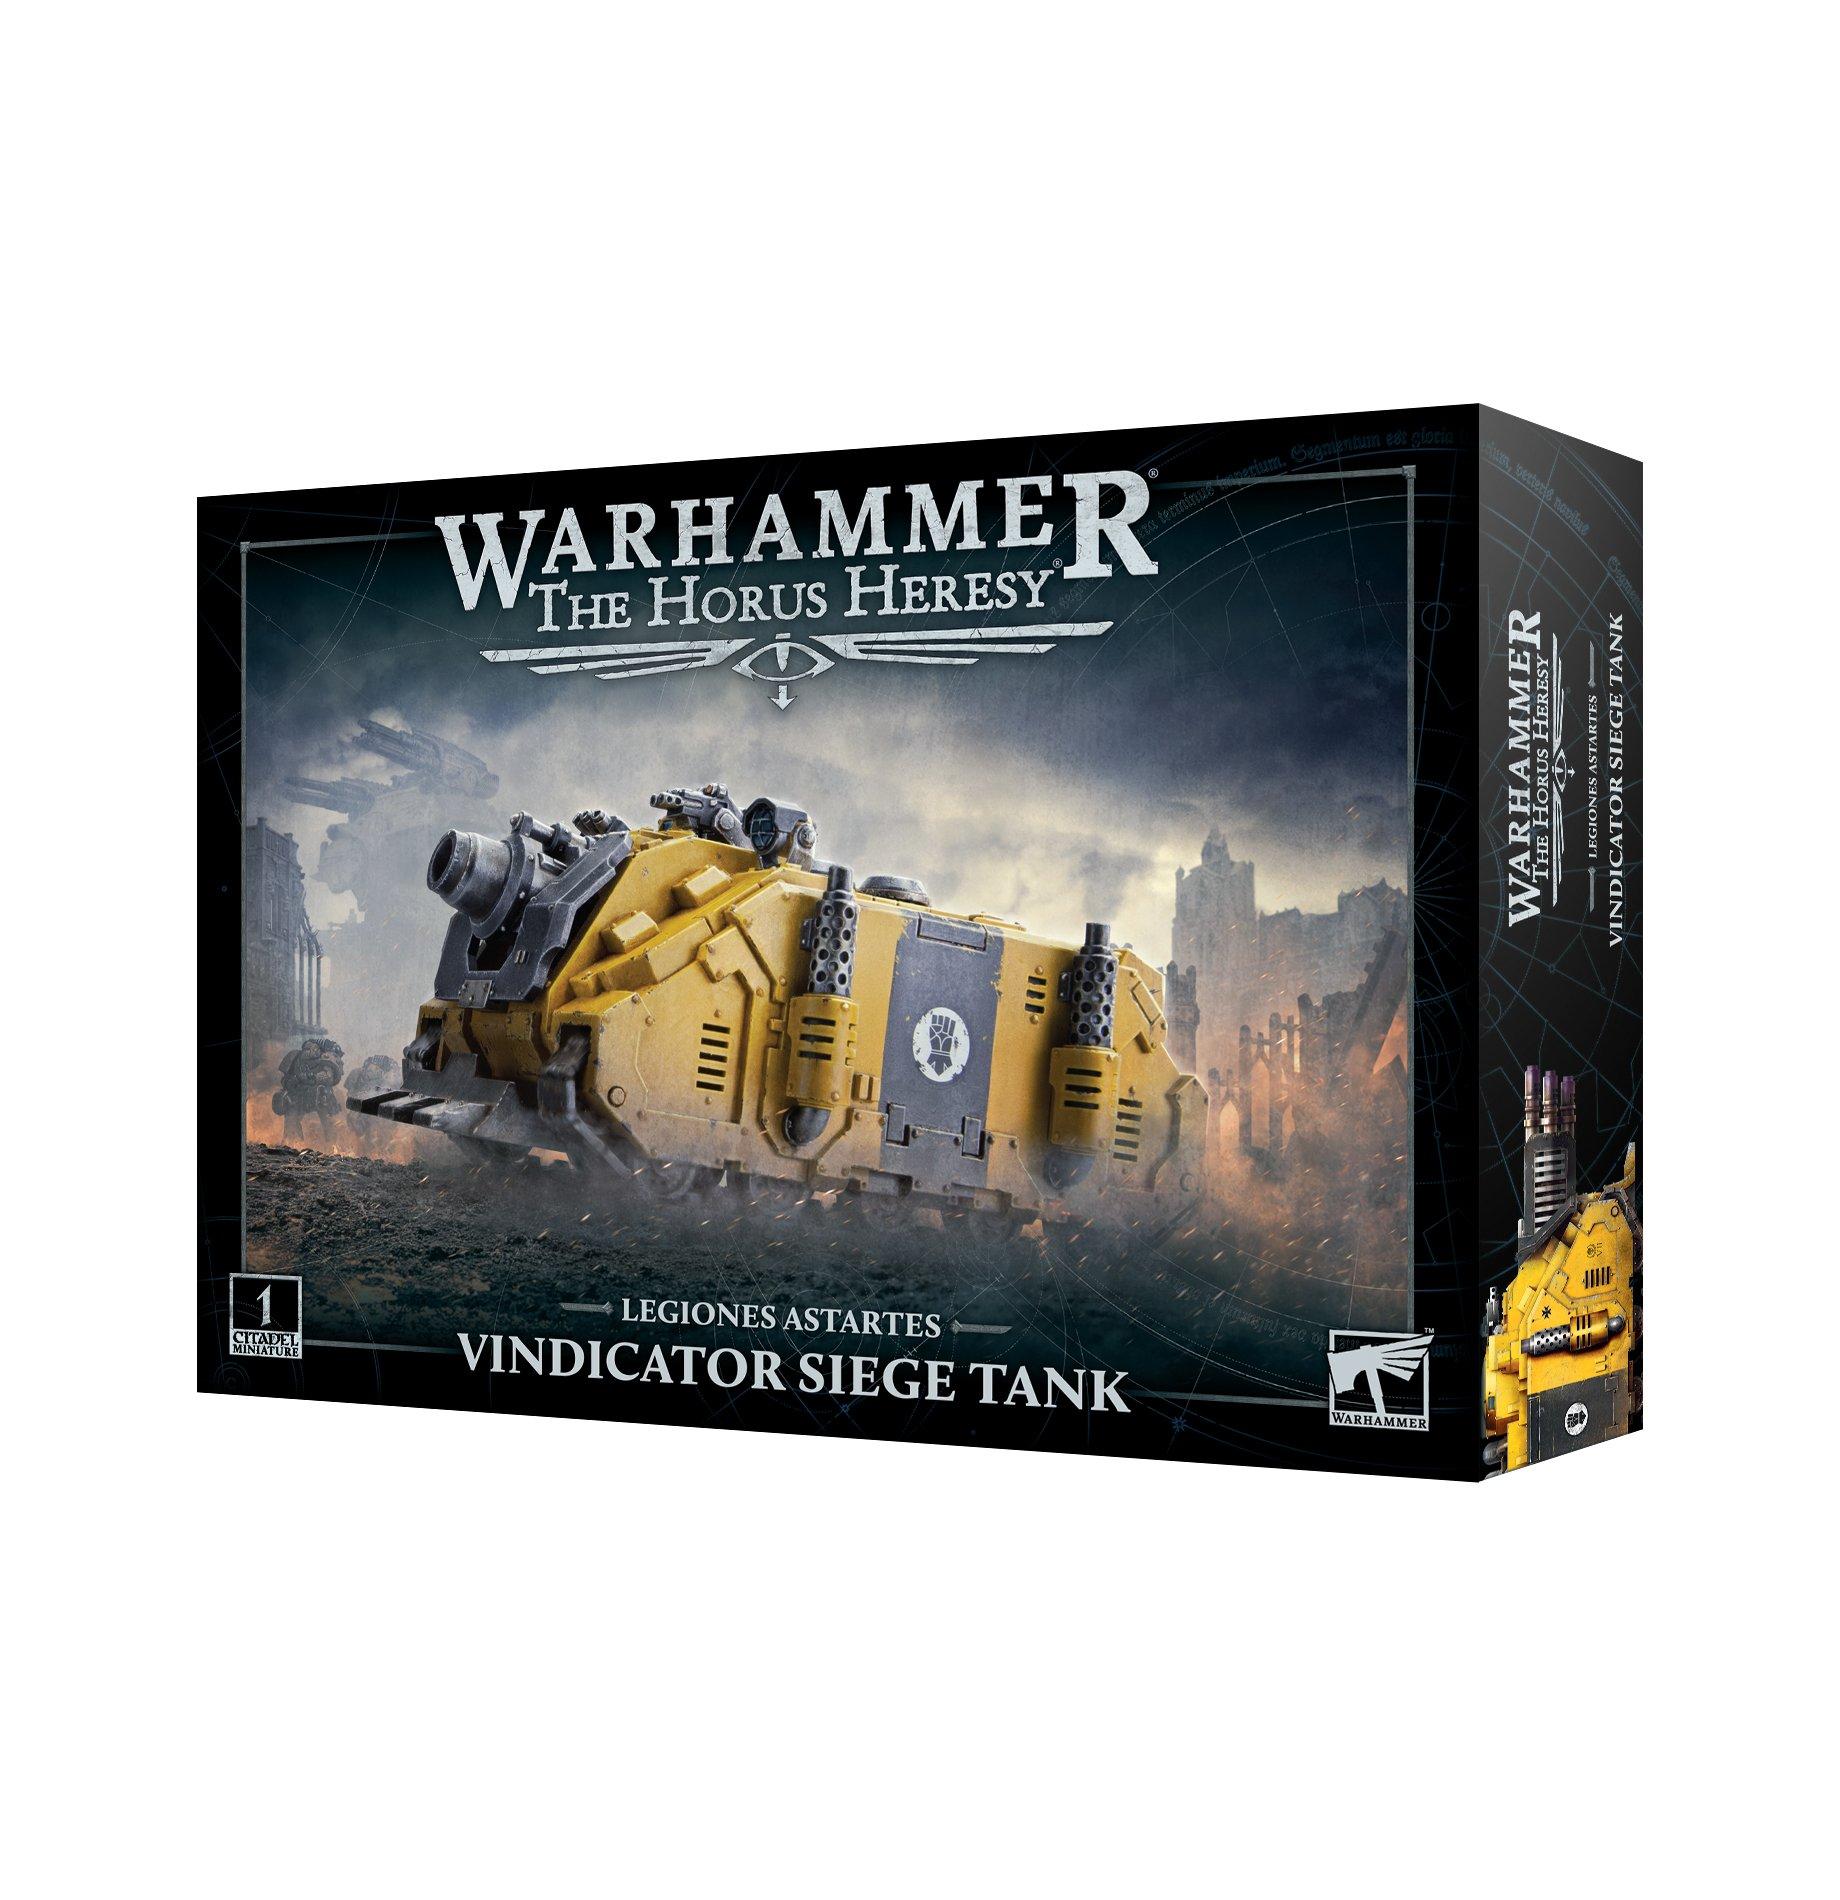 Warhammer: The Horus Heresy - Legiones Astartes: Vindicator Siege Tank